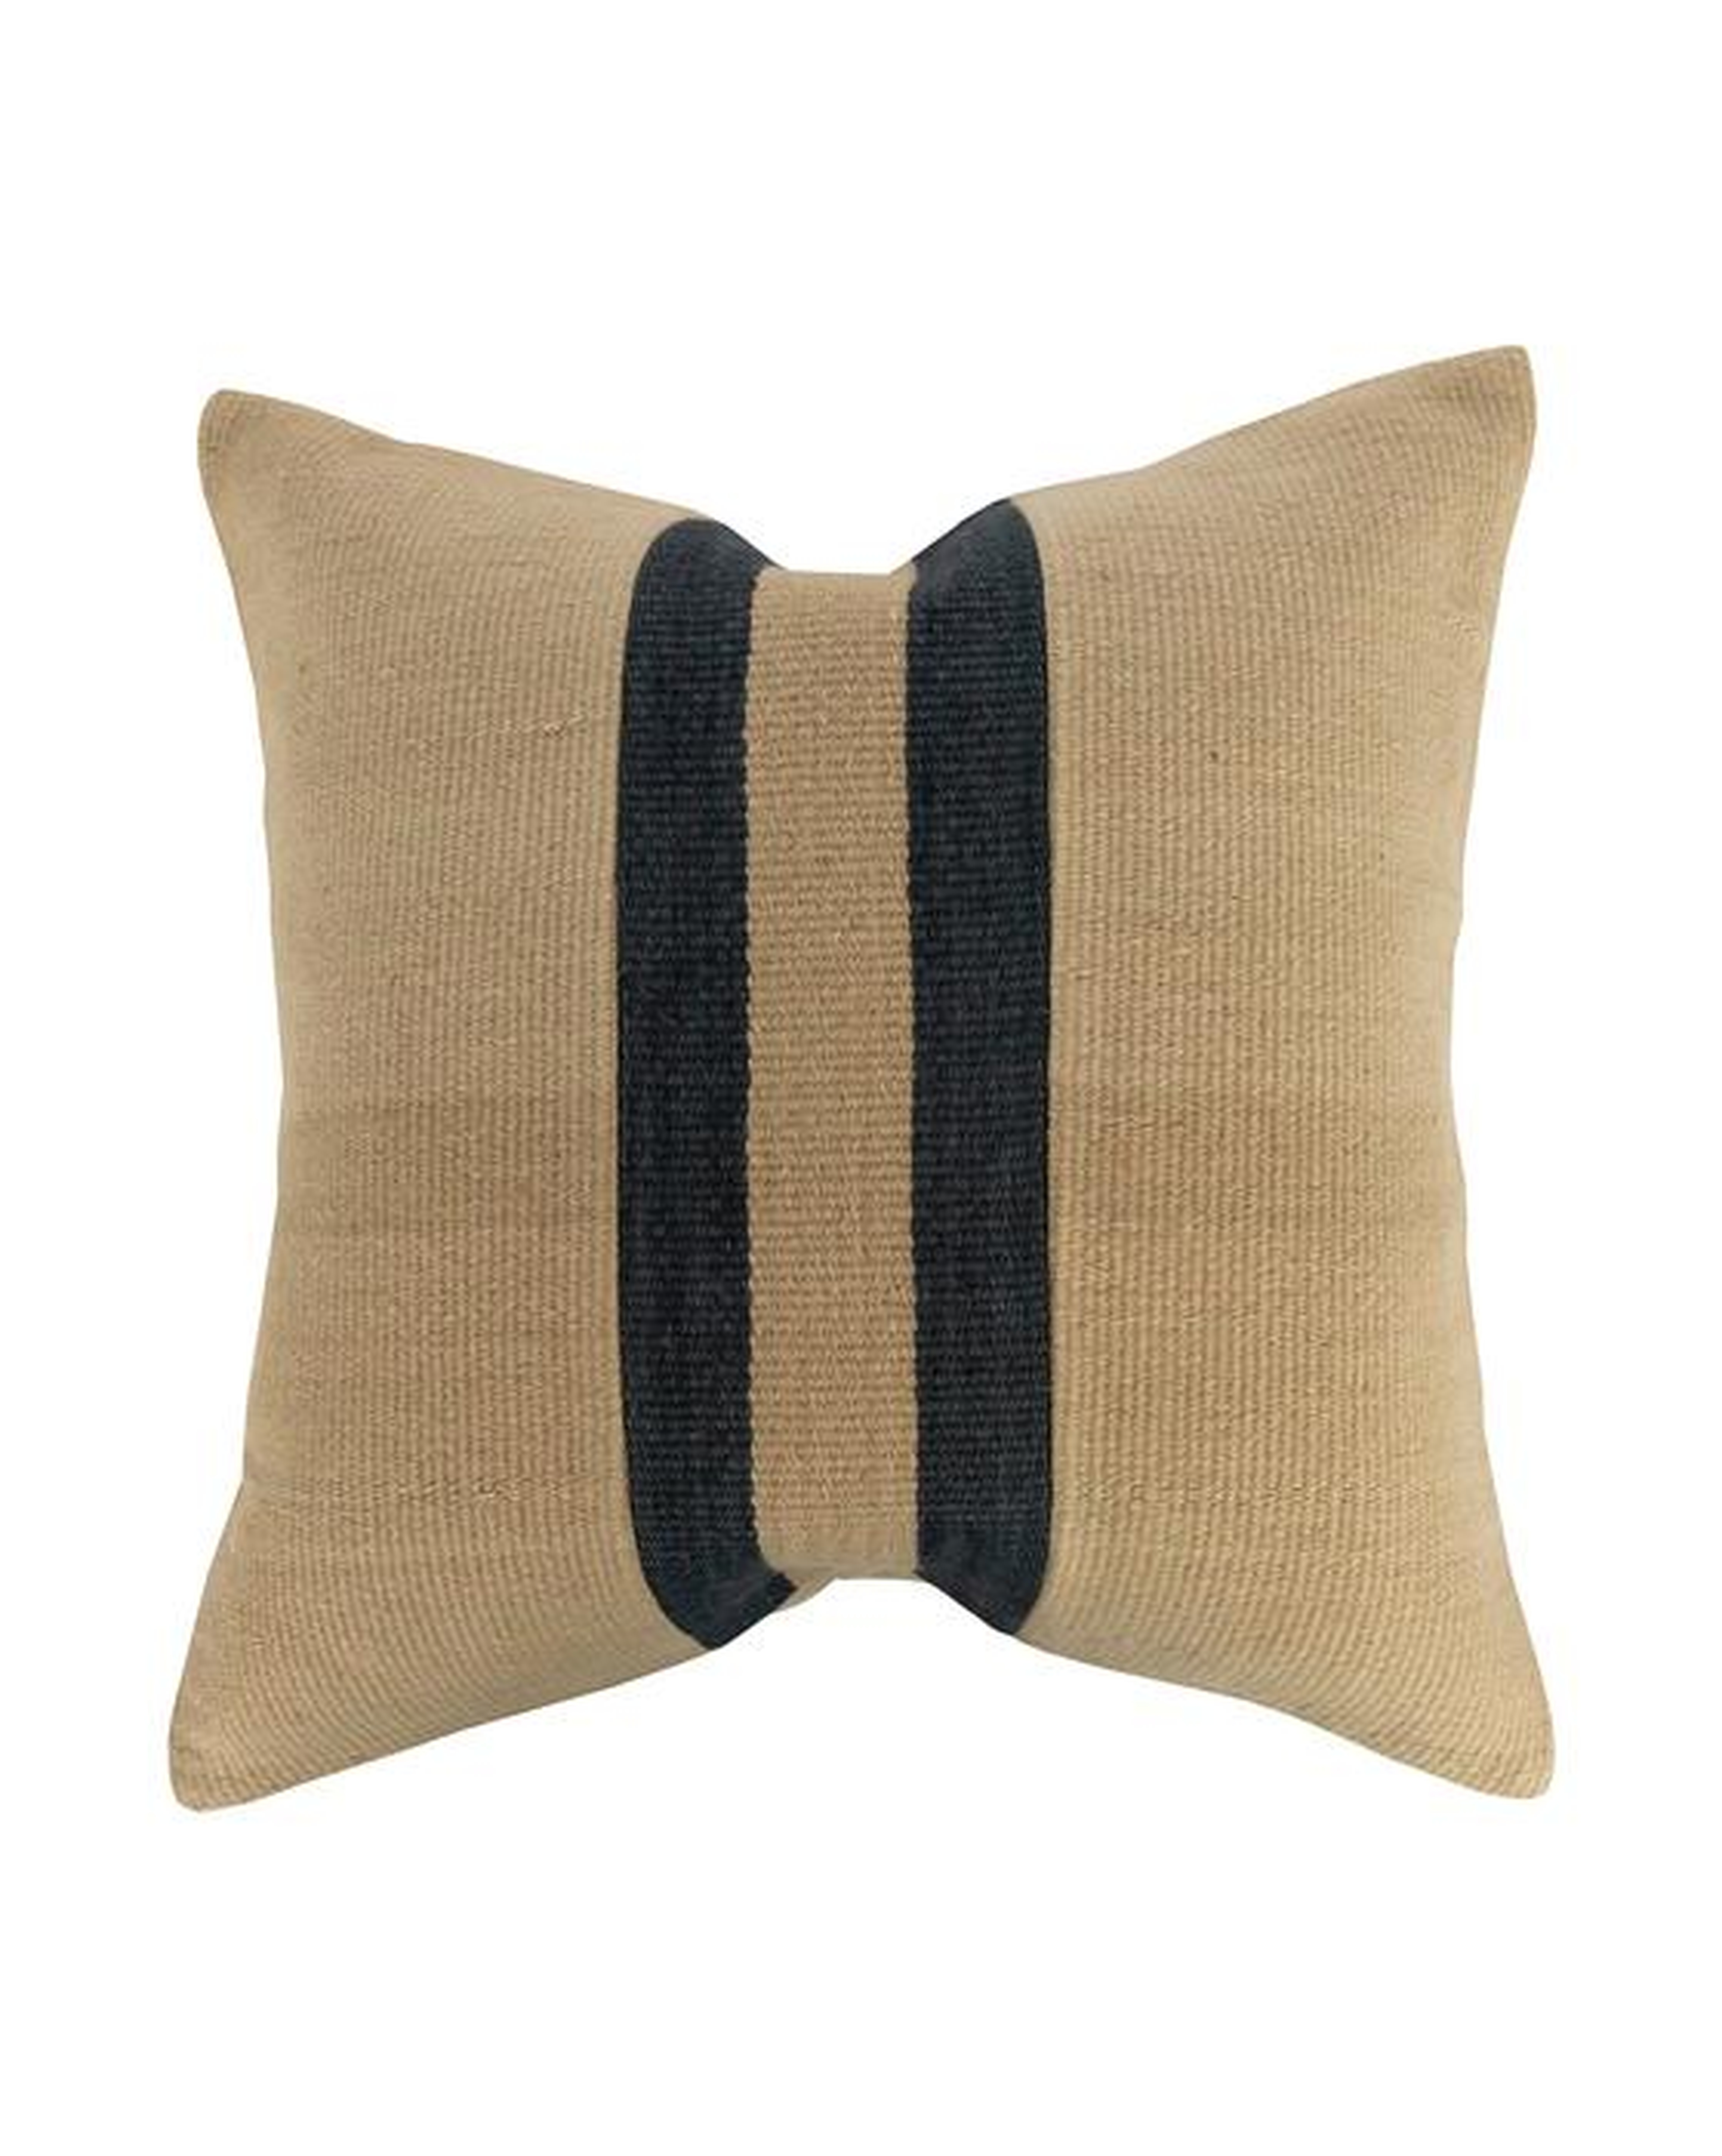 Reid Striped Pillow - McGee & Co.